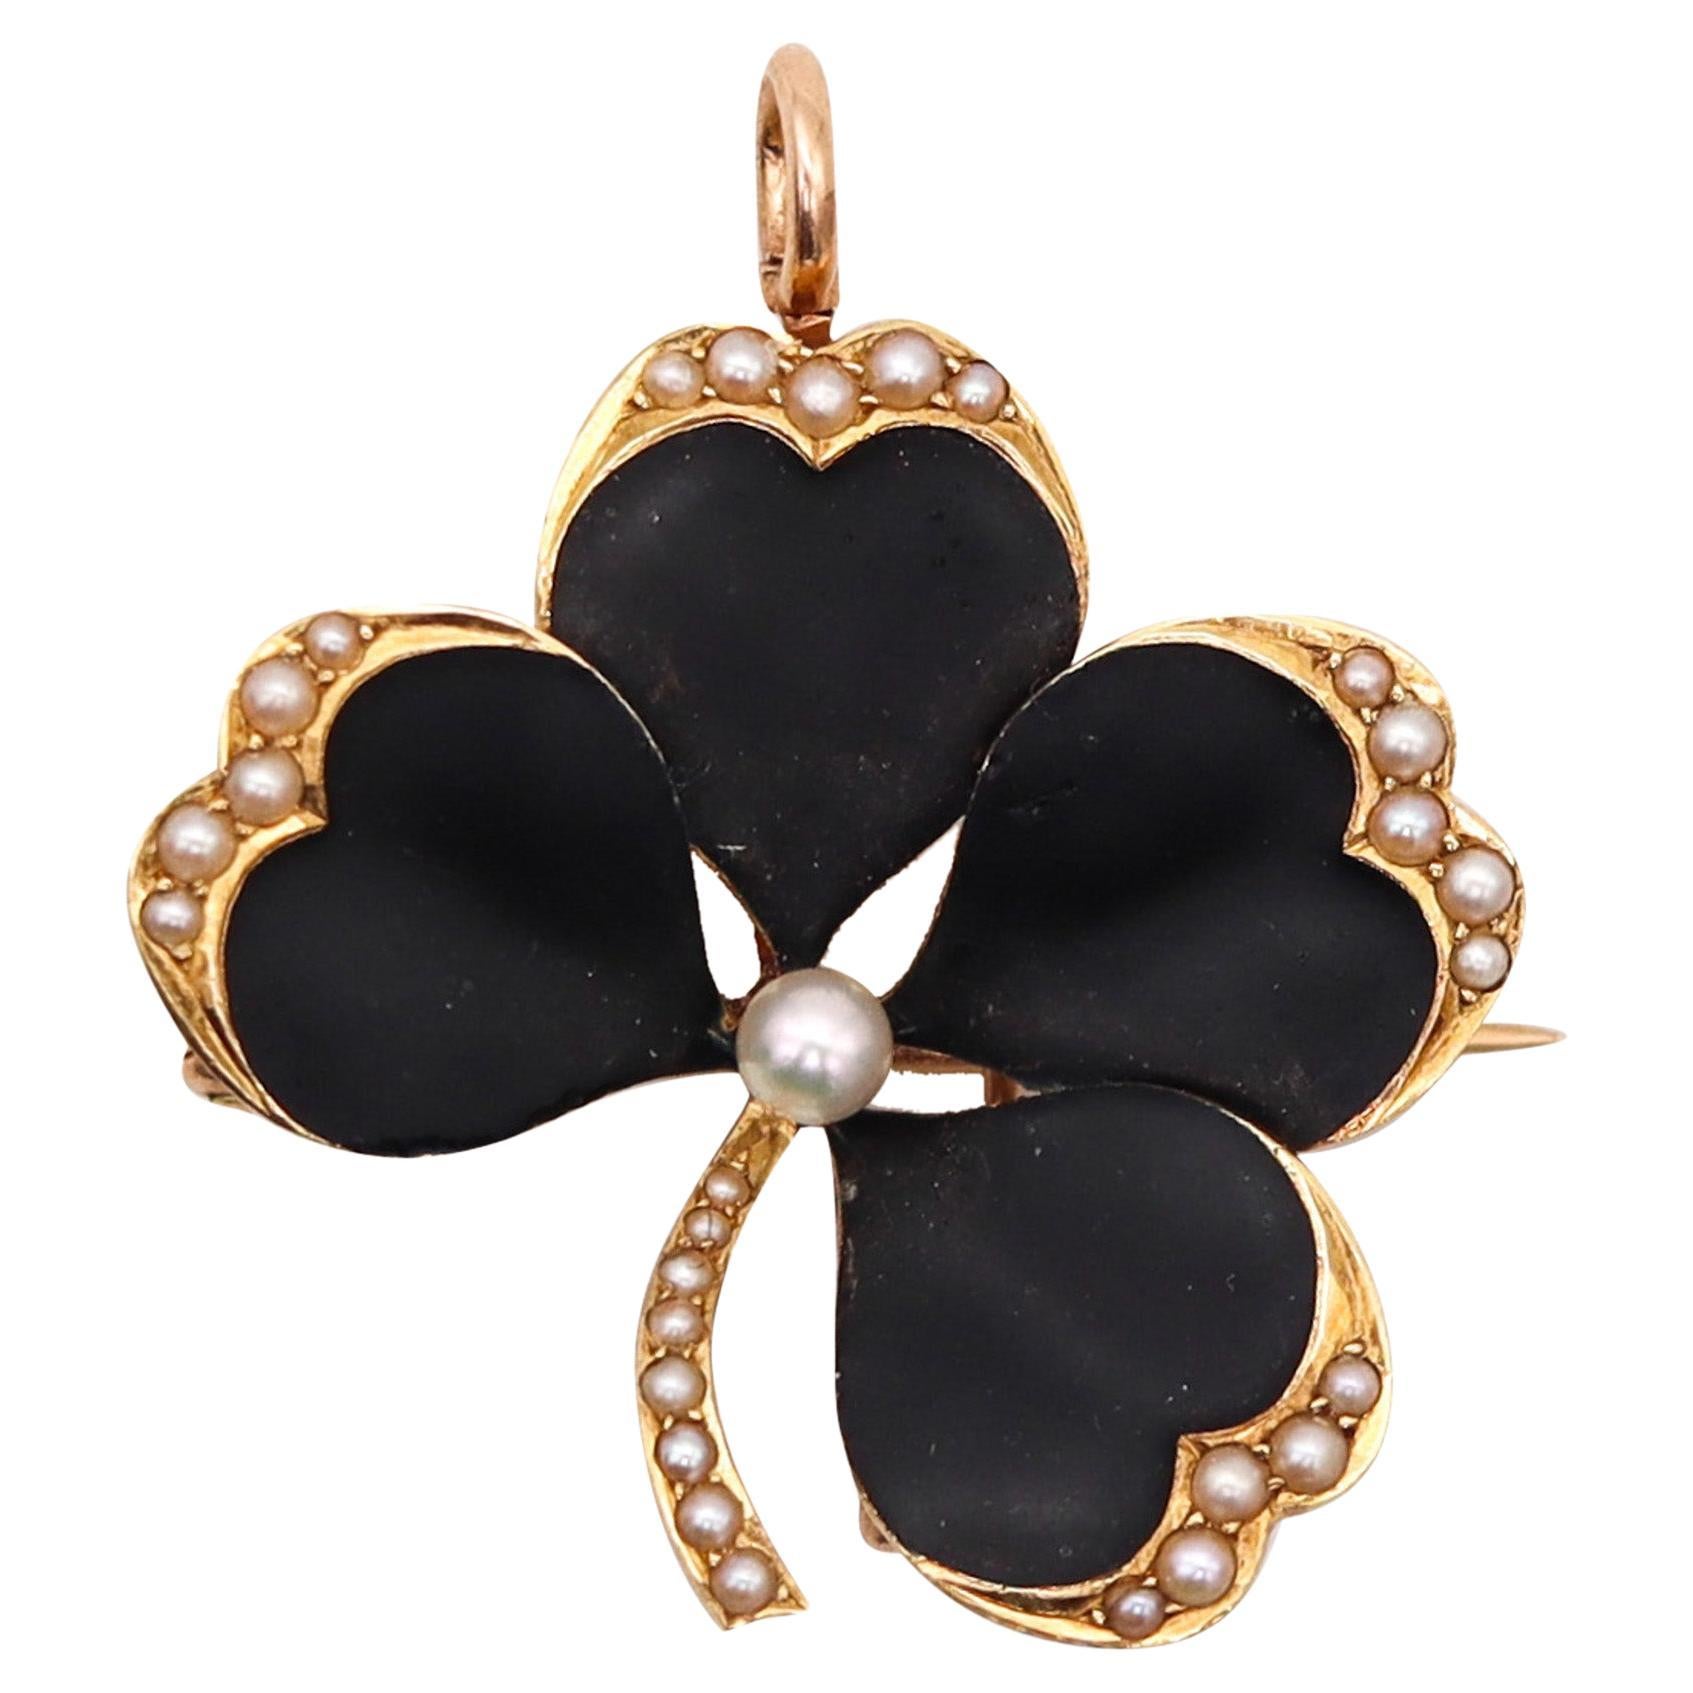 Crane & Theurer 1900 Art Nouveau Enameled Clover Pendant 14Kt Gold With Pearls For Sale